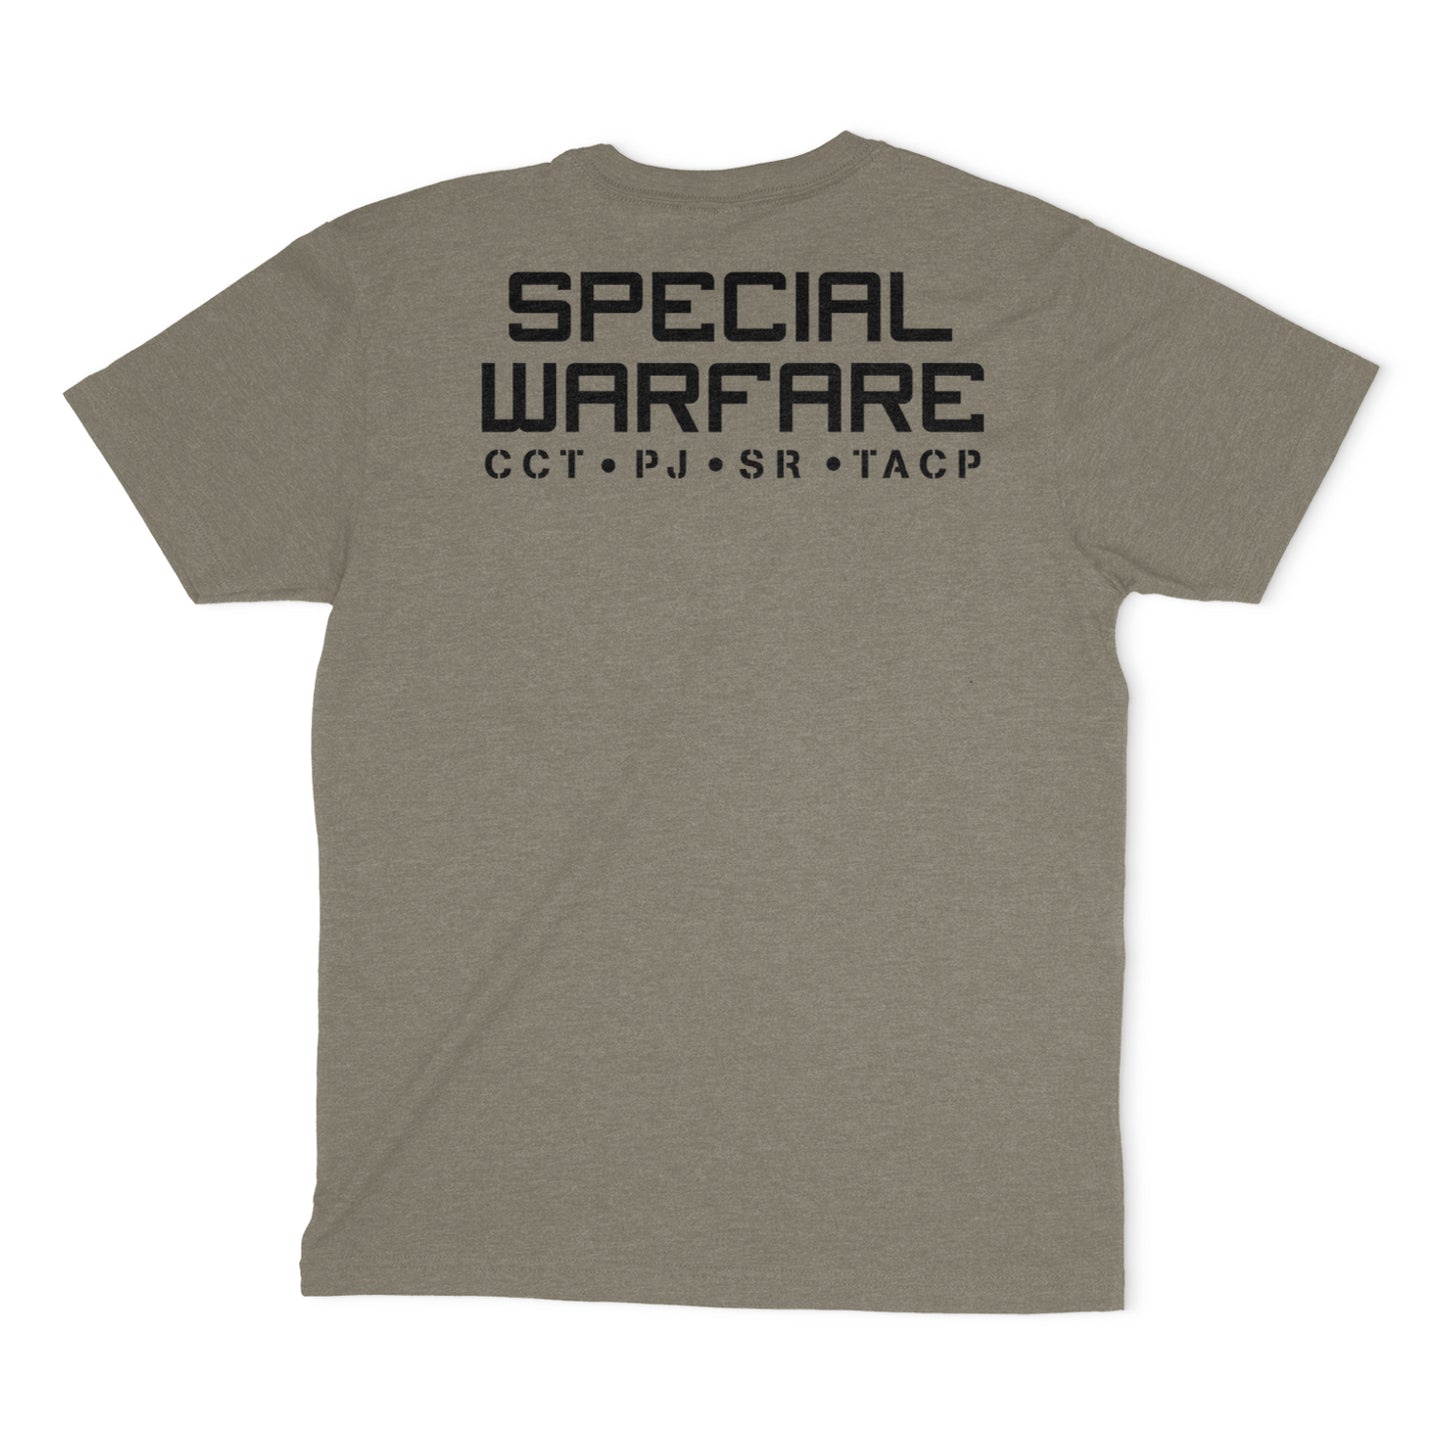 The Special Warfare T-Shirt